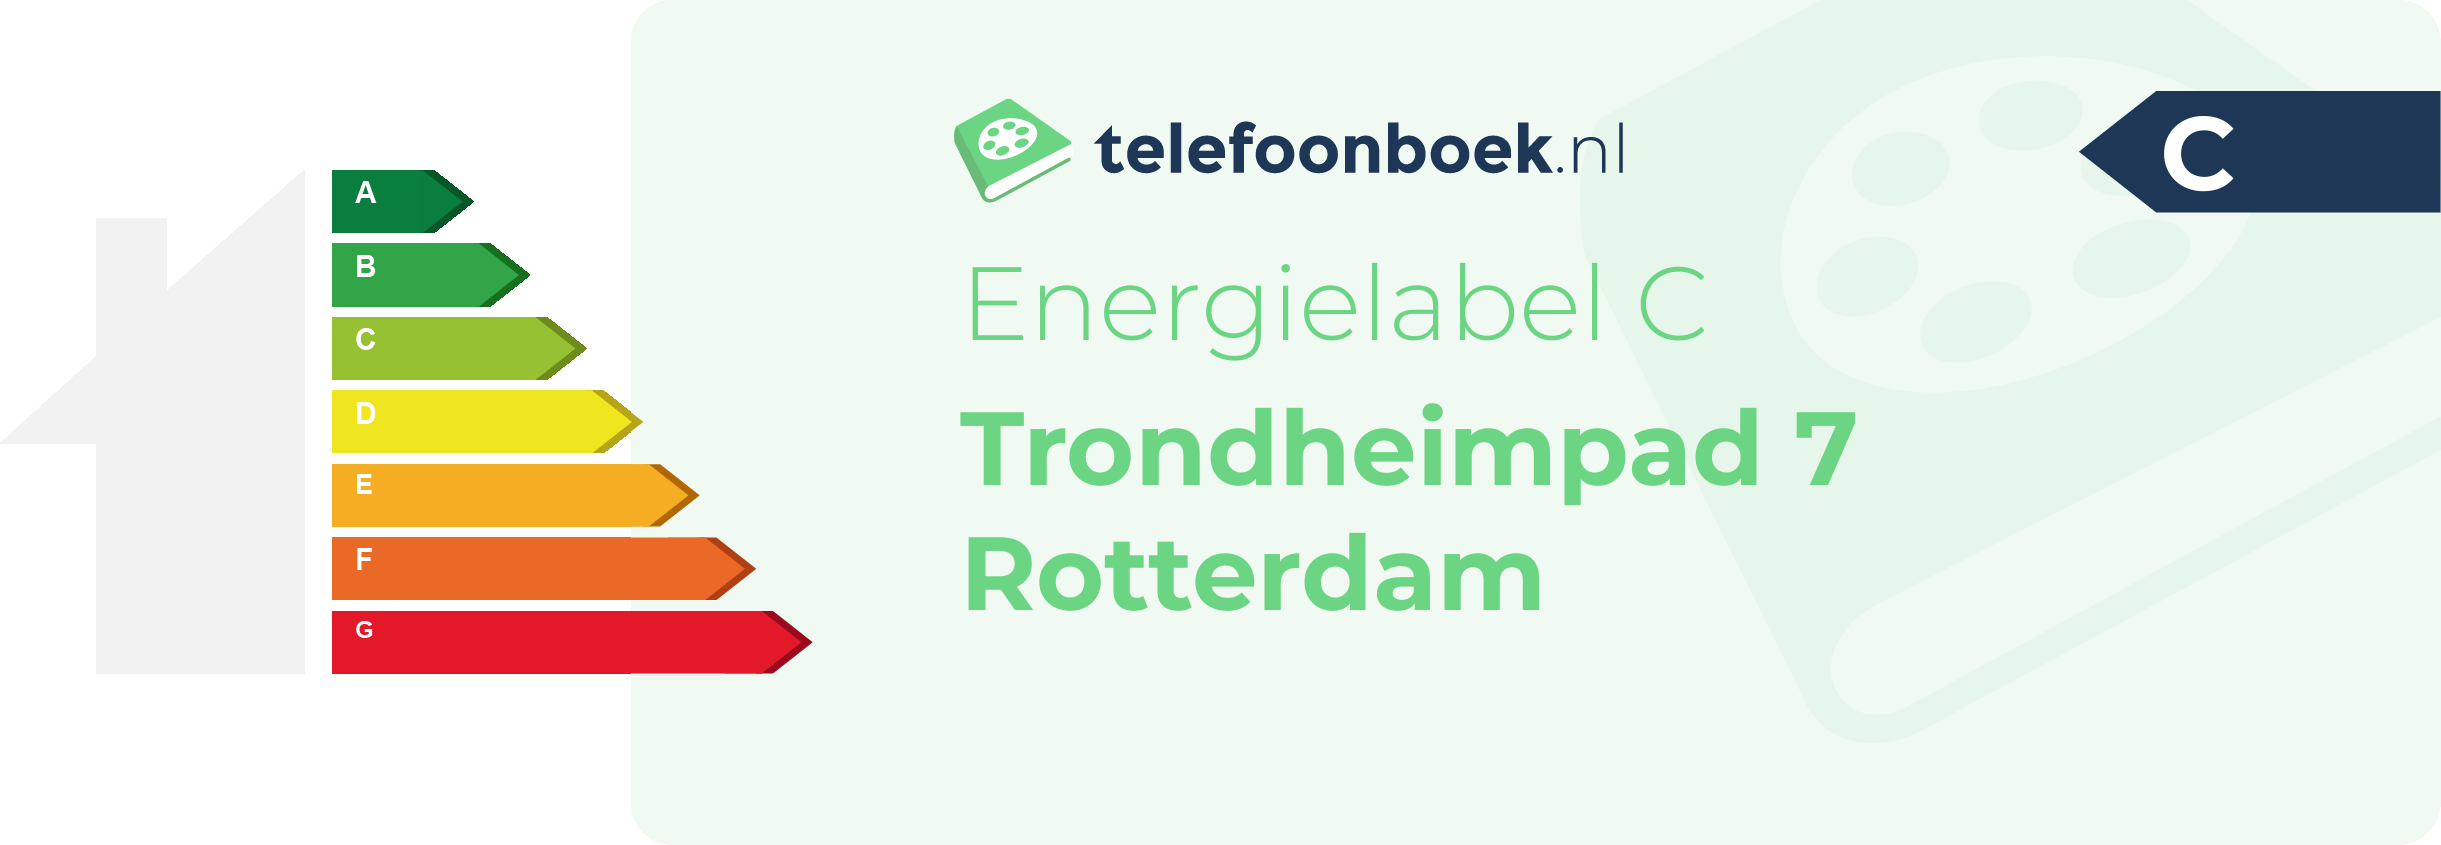 Energielabel Trondheimpad 7 Rotterdam